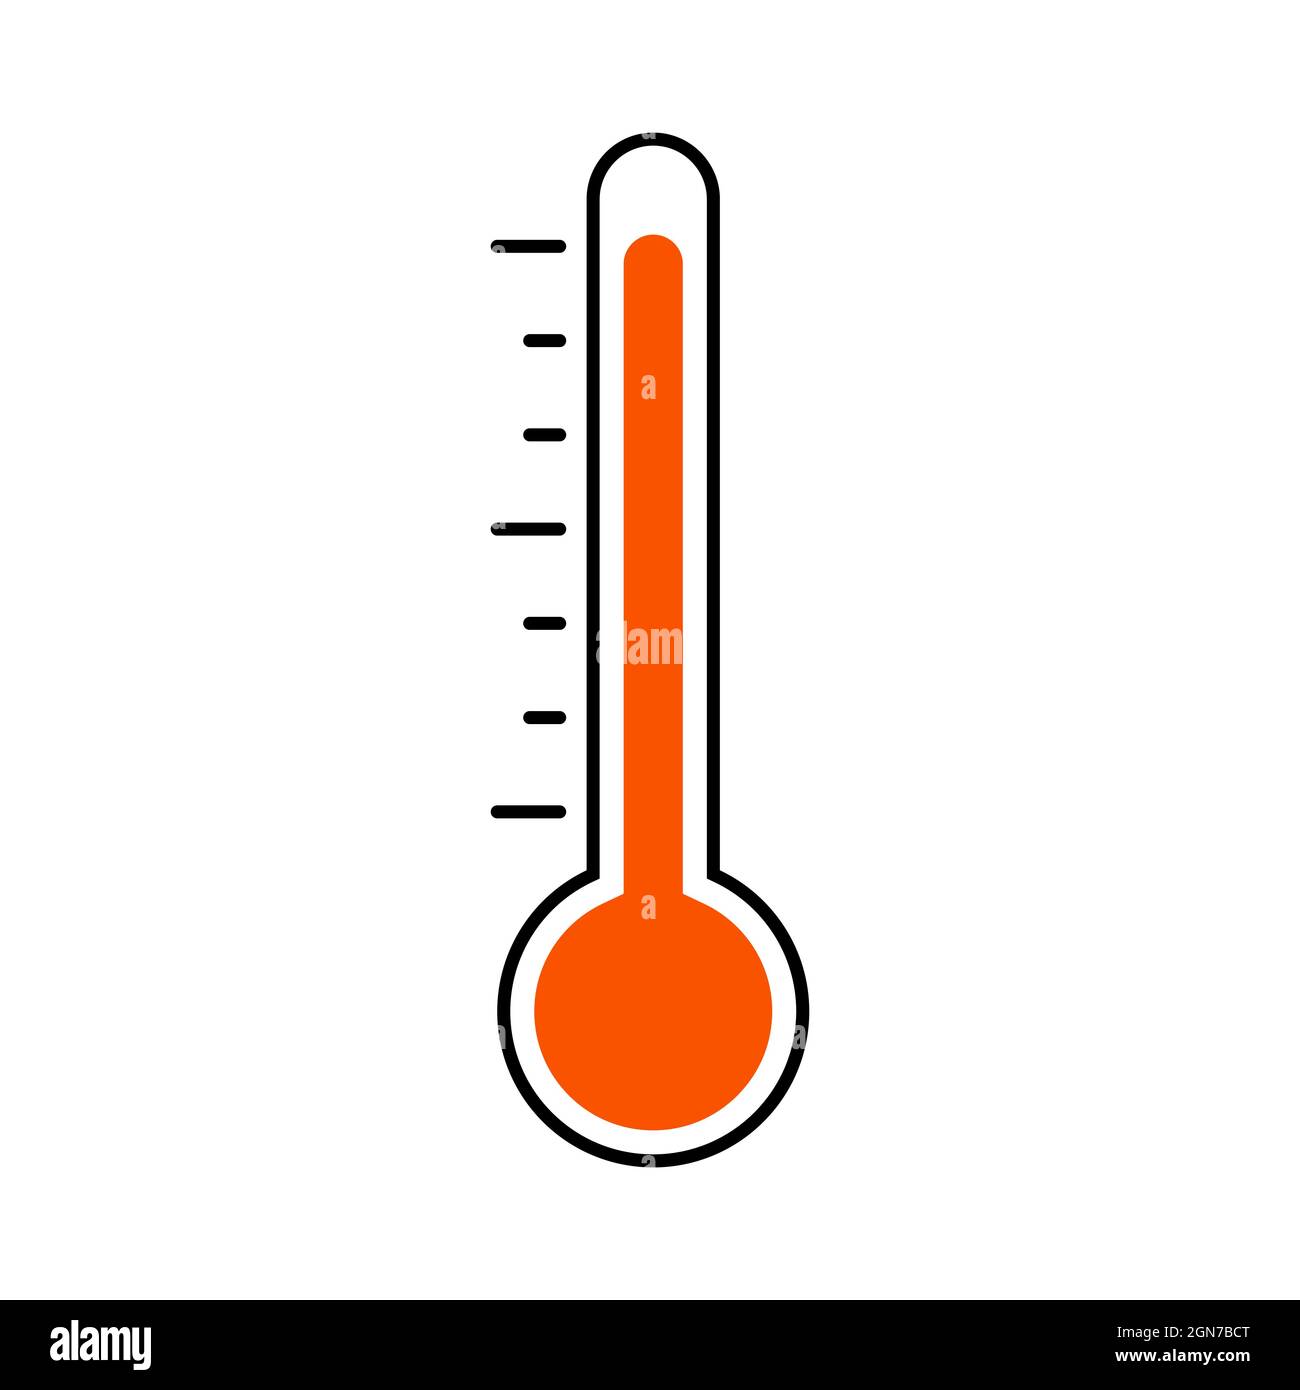 Thermometer At High Temperature by Ikon Ikon Images